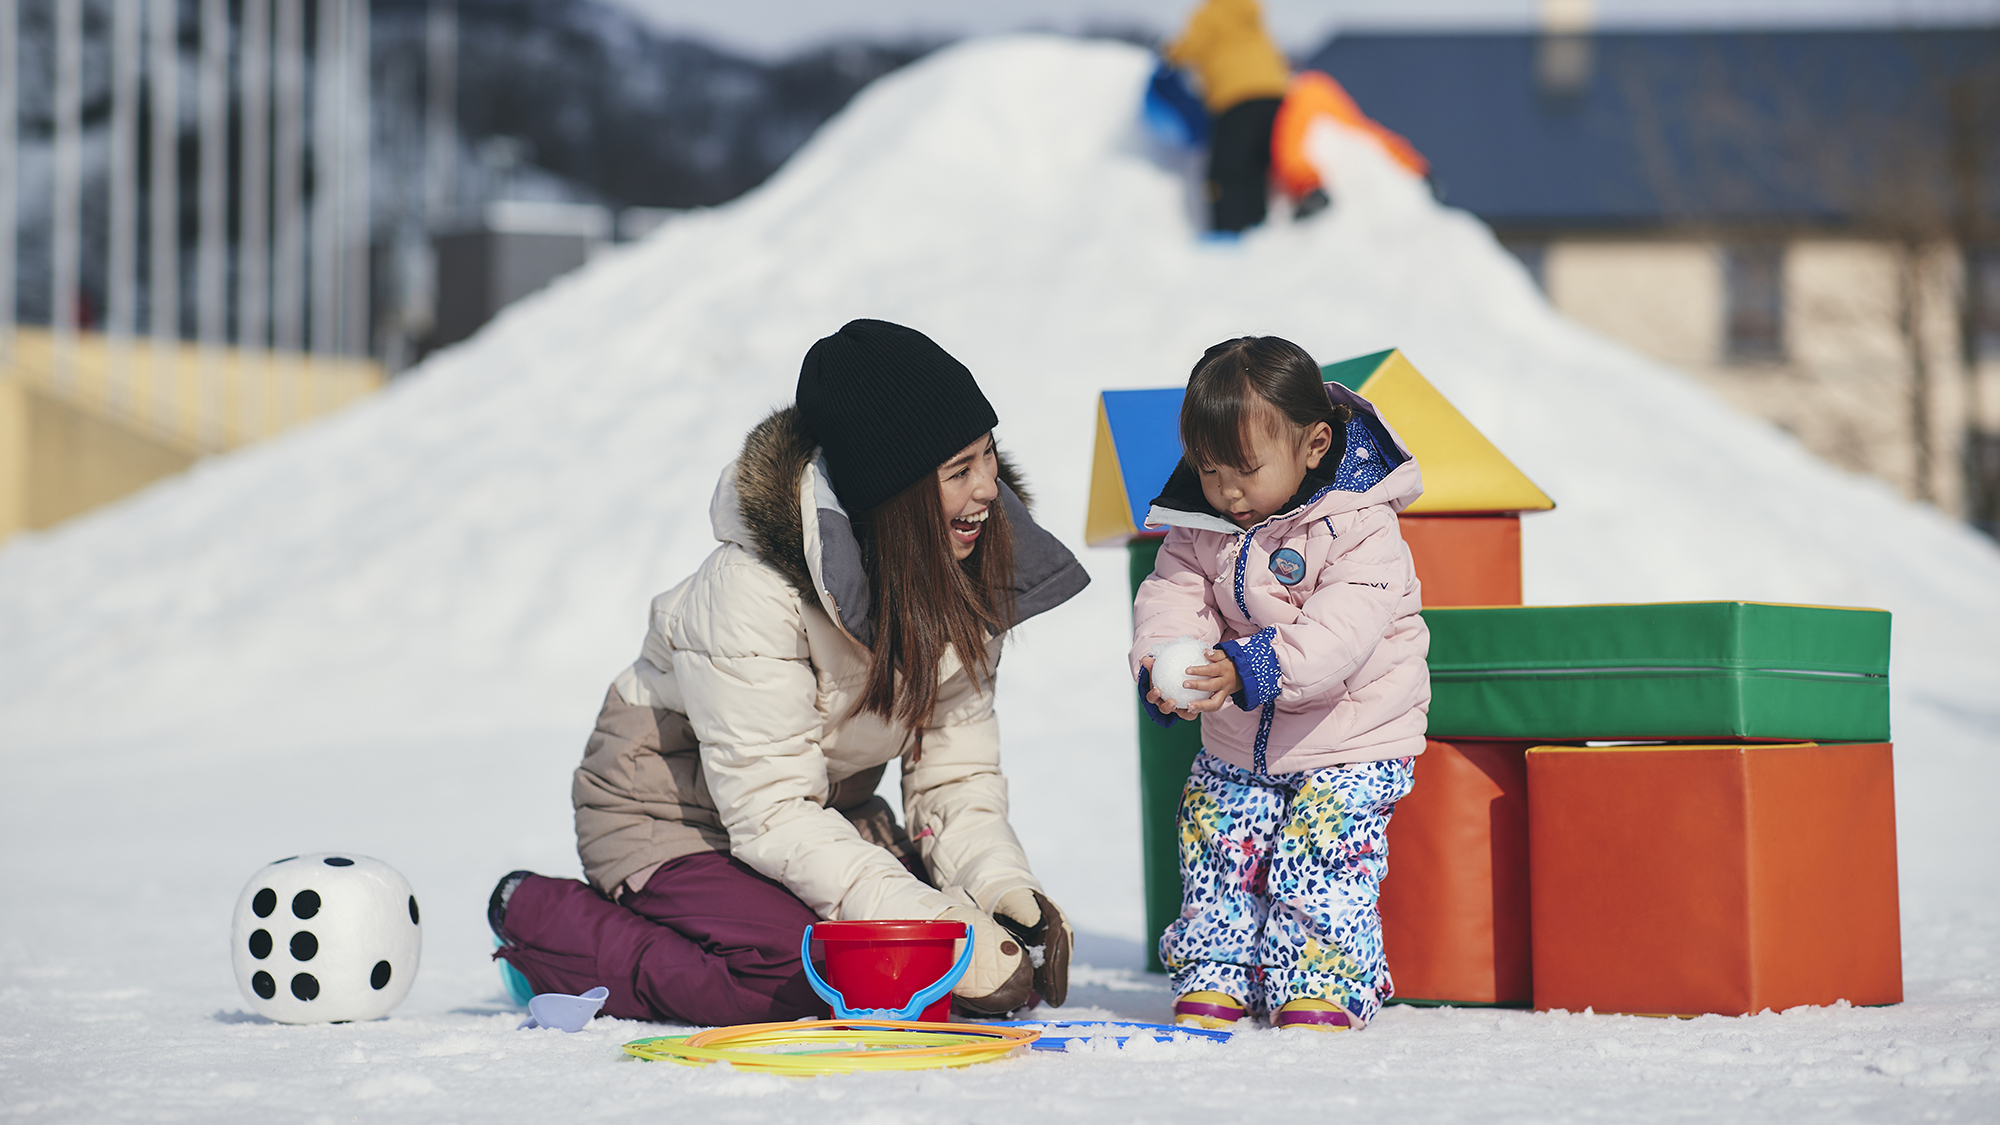 Lotte Ari Resort, Ski Season, Model